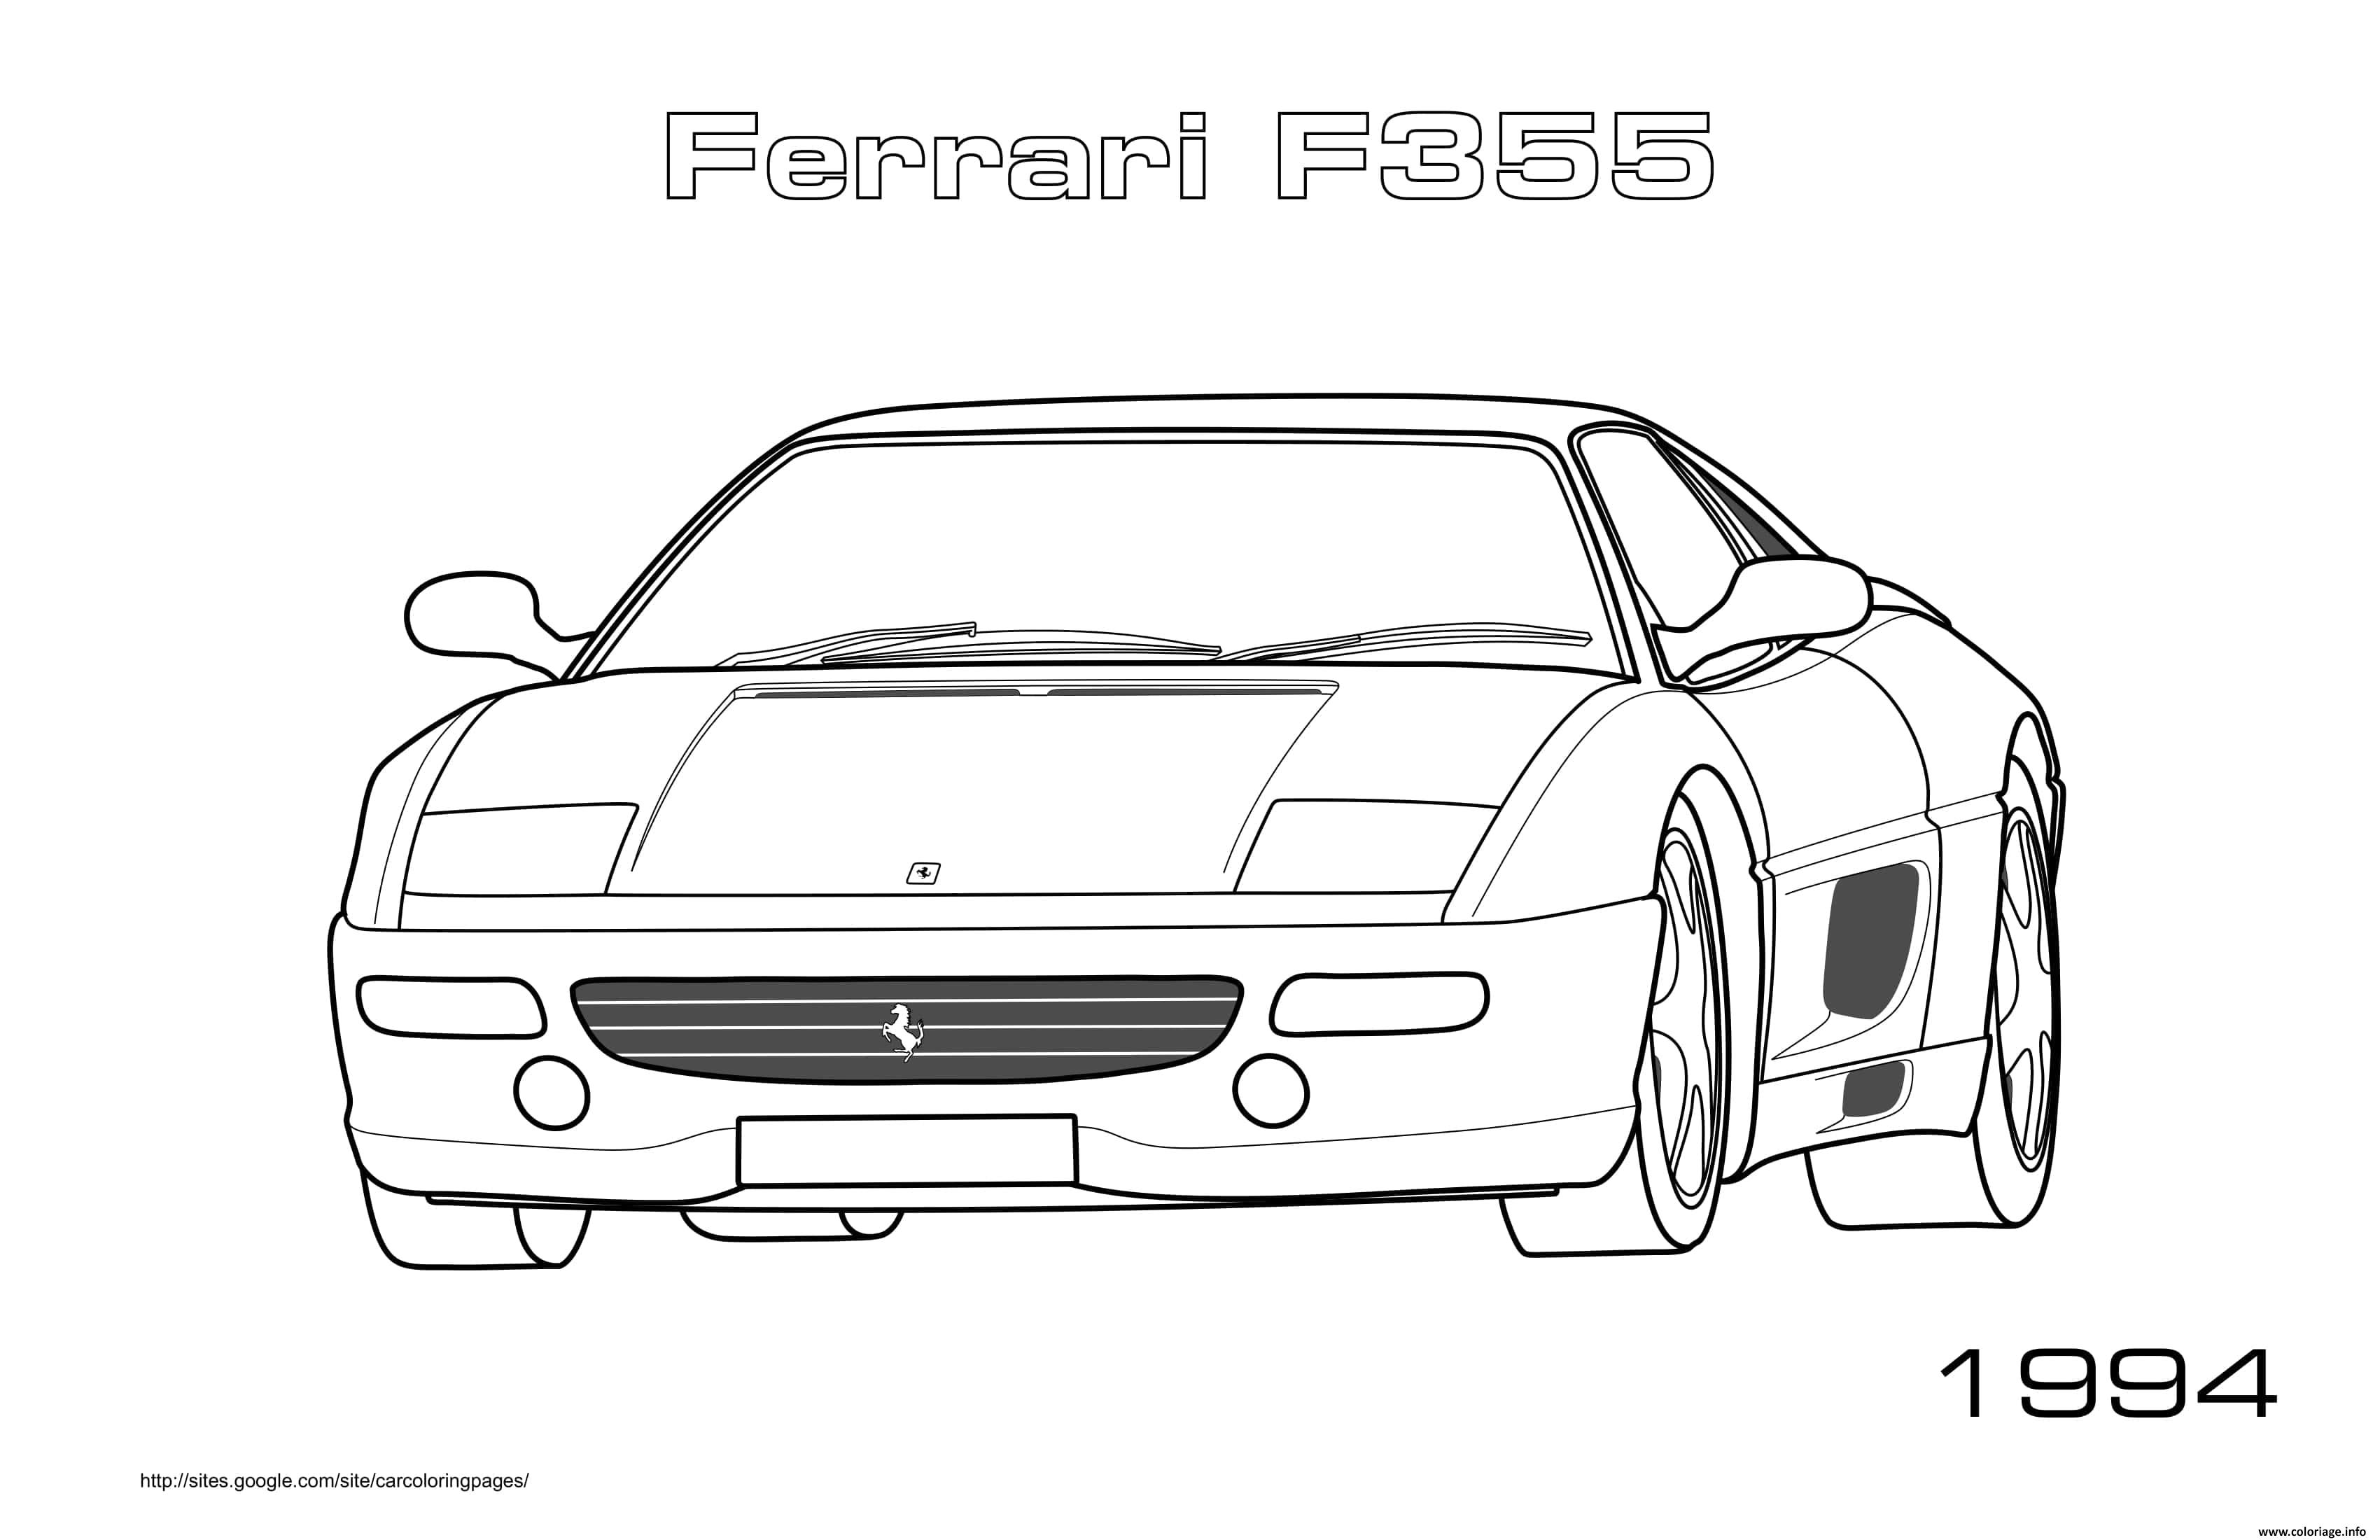 Dessin Ferrari F355 1994 Coloriage Gratuit à Imprimer